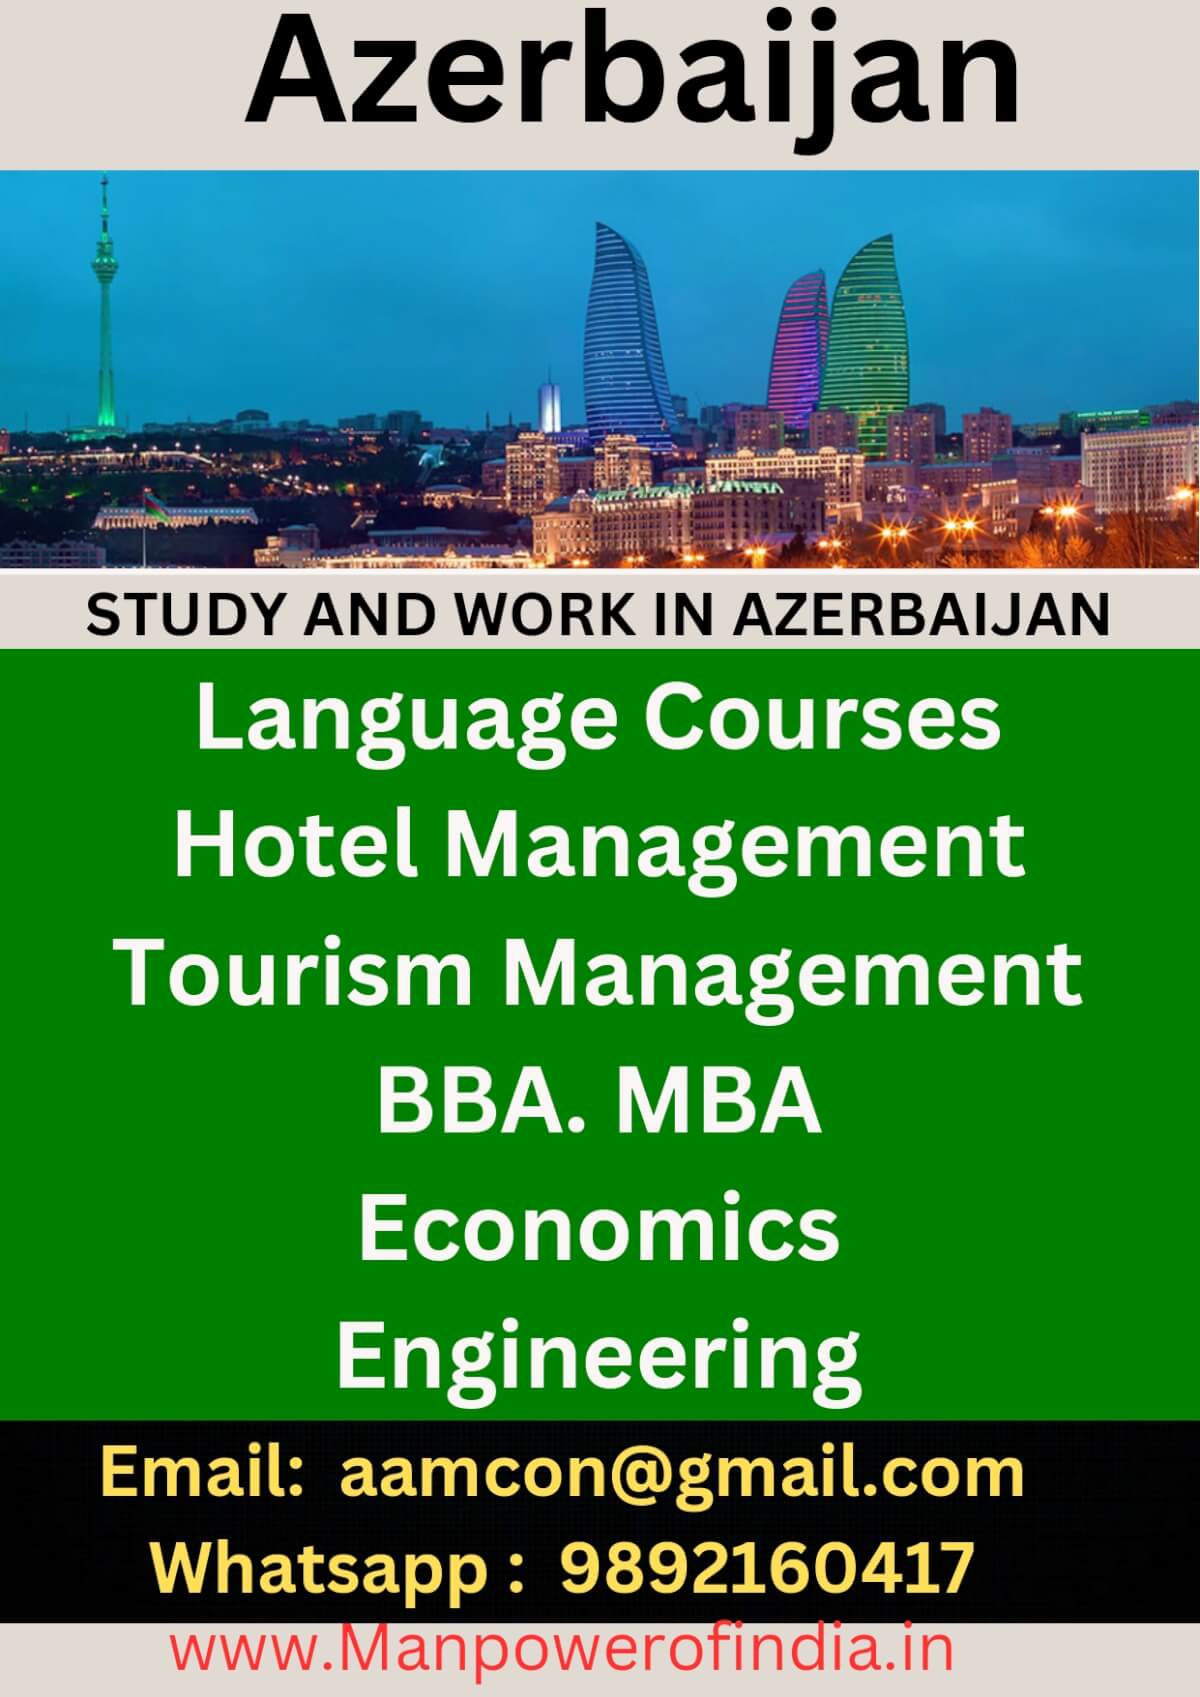 Work and Study in Azerbaijan